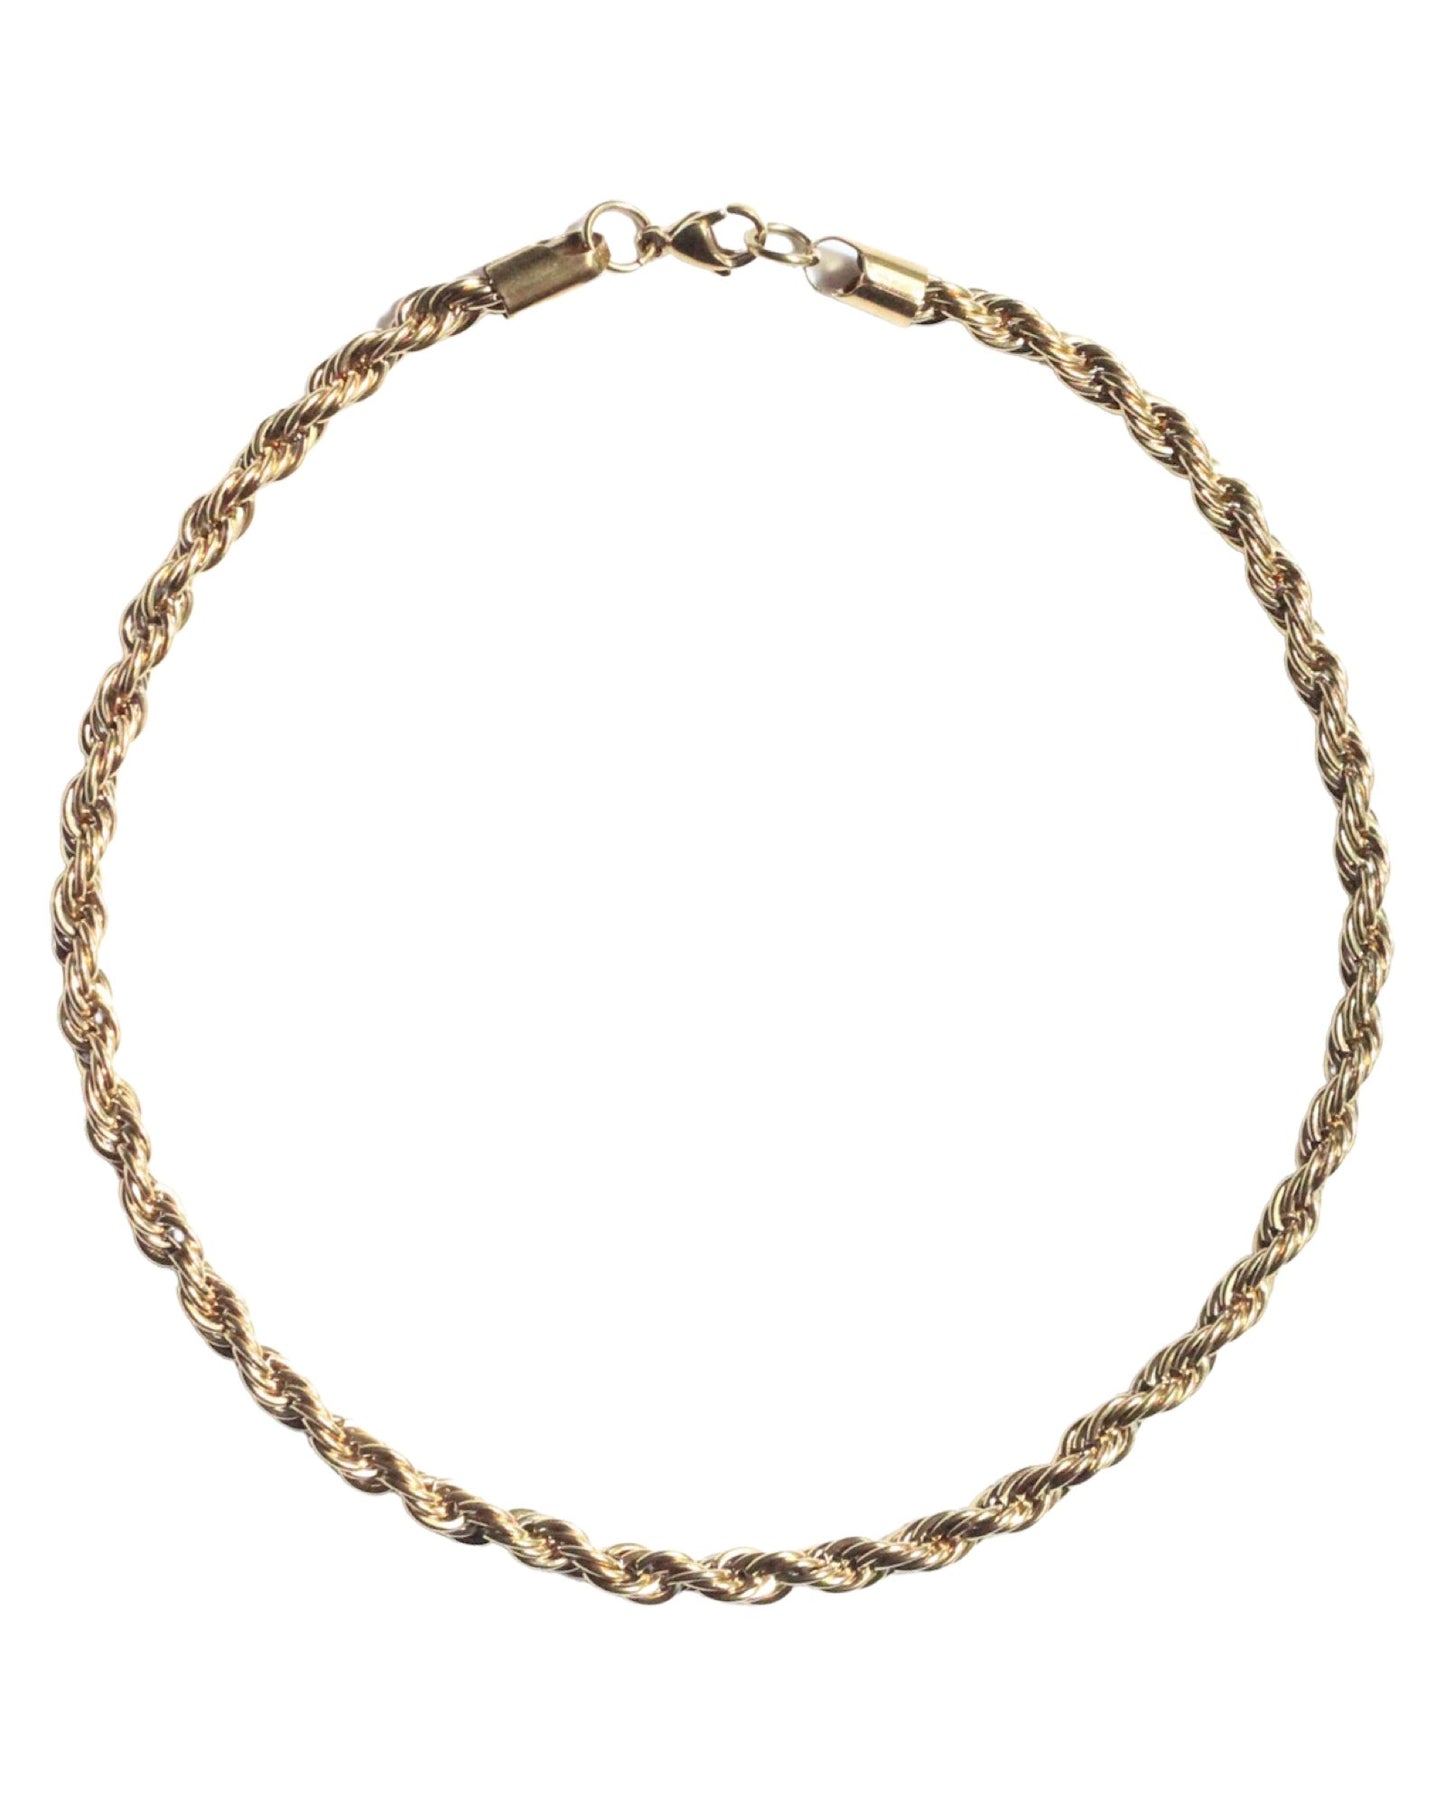 TWIST CHAIN - 6MM GOLD - DE.FINE Collection Jewelry